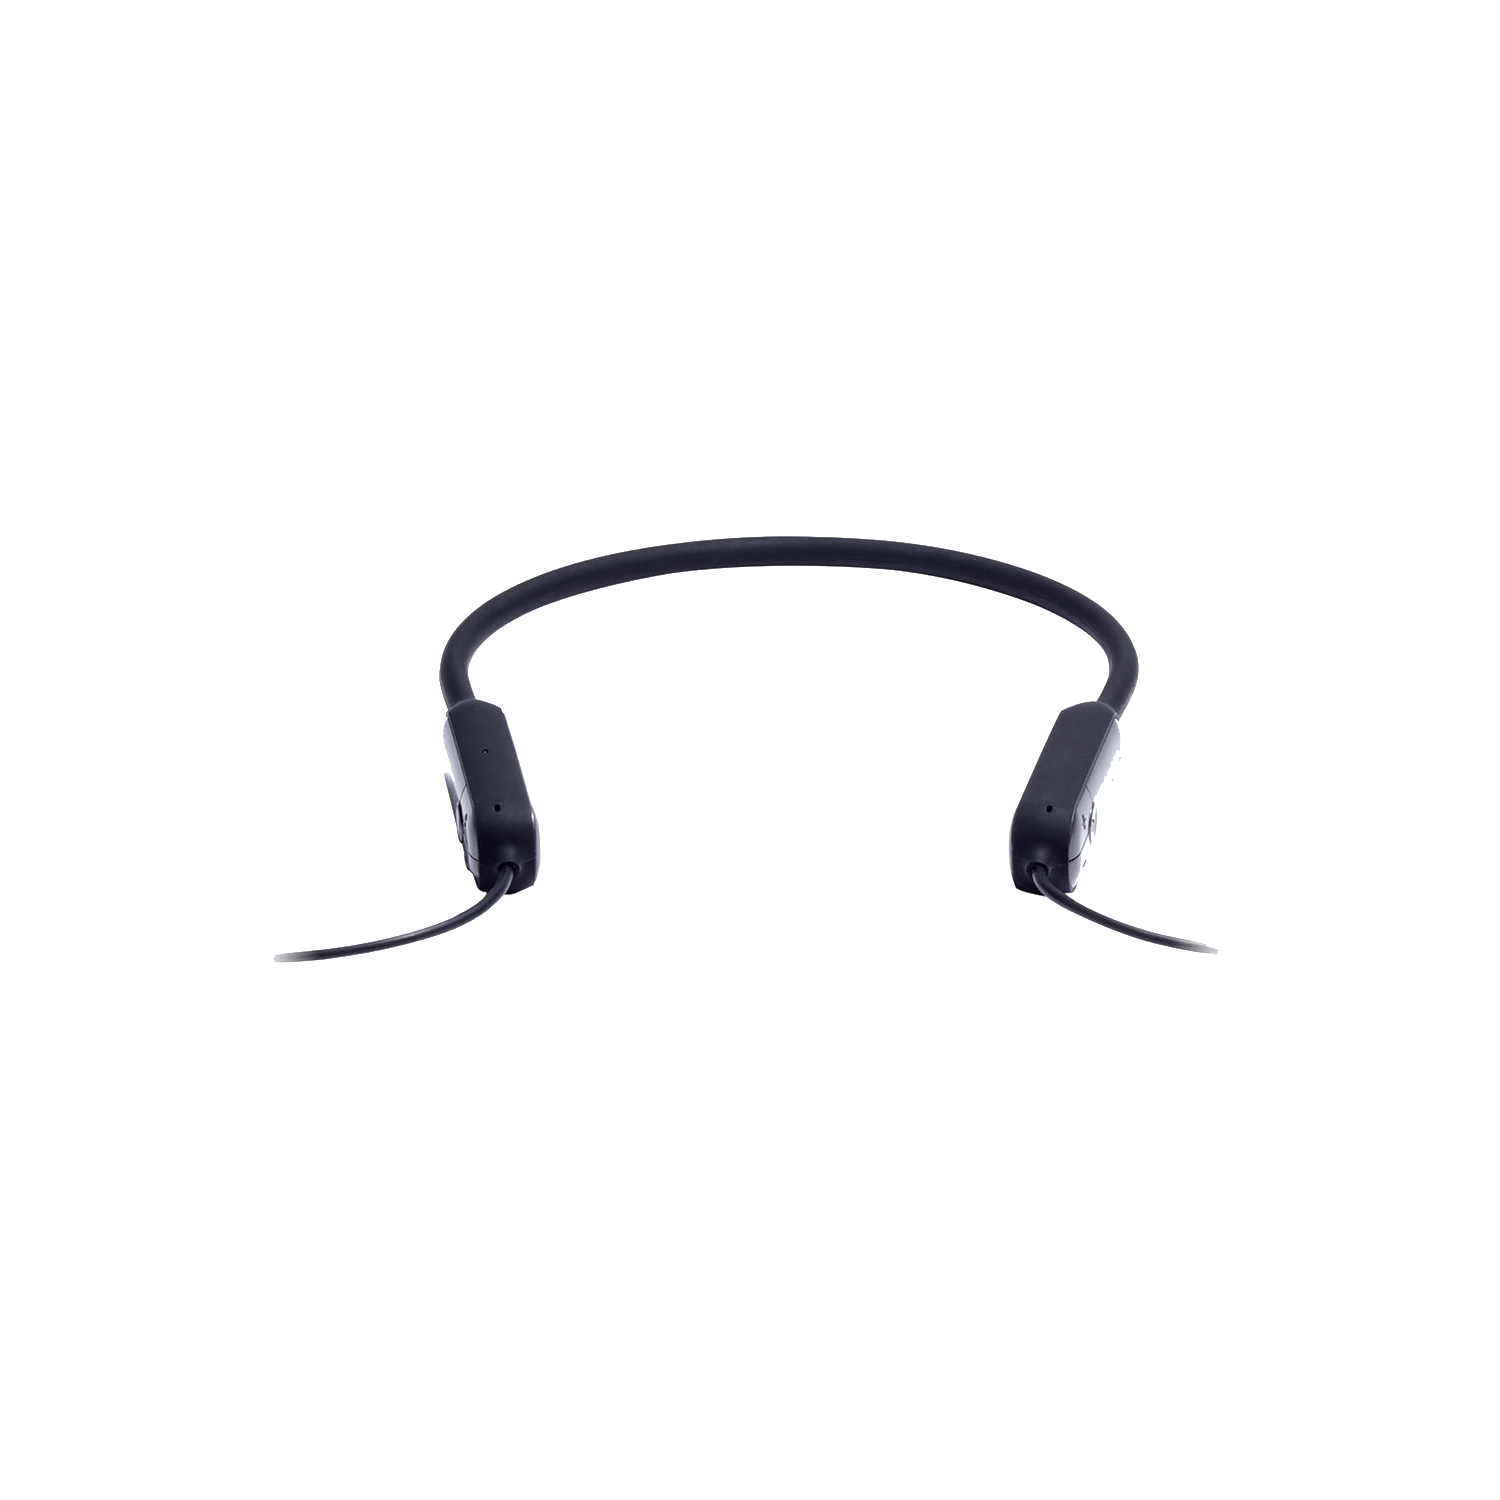 JBL Everest Elite Wireless Noise-Canceling Headphones